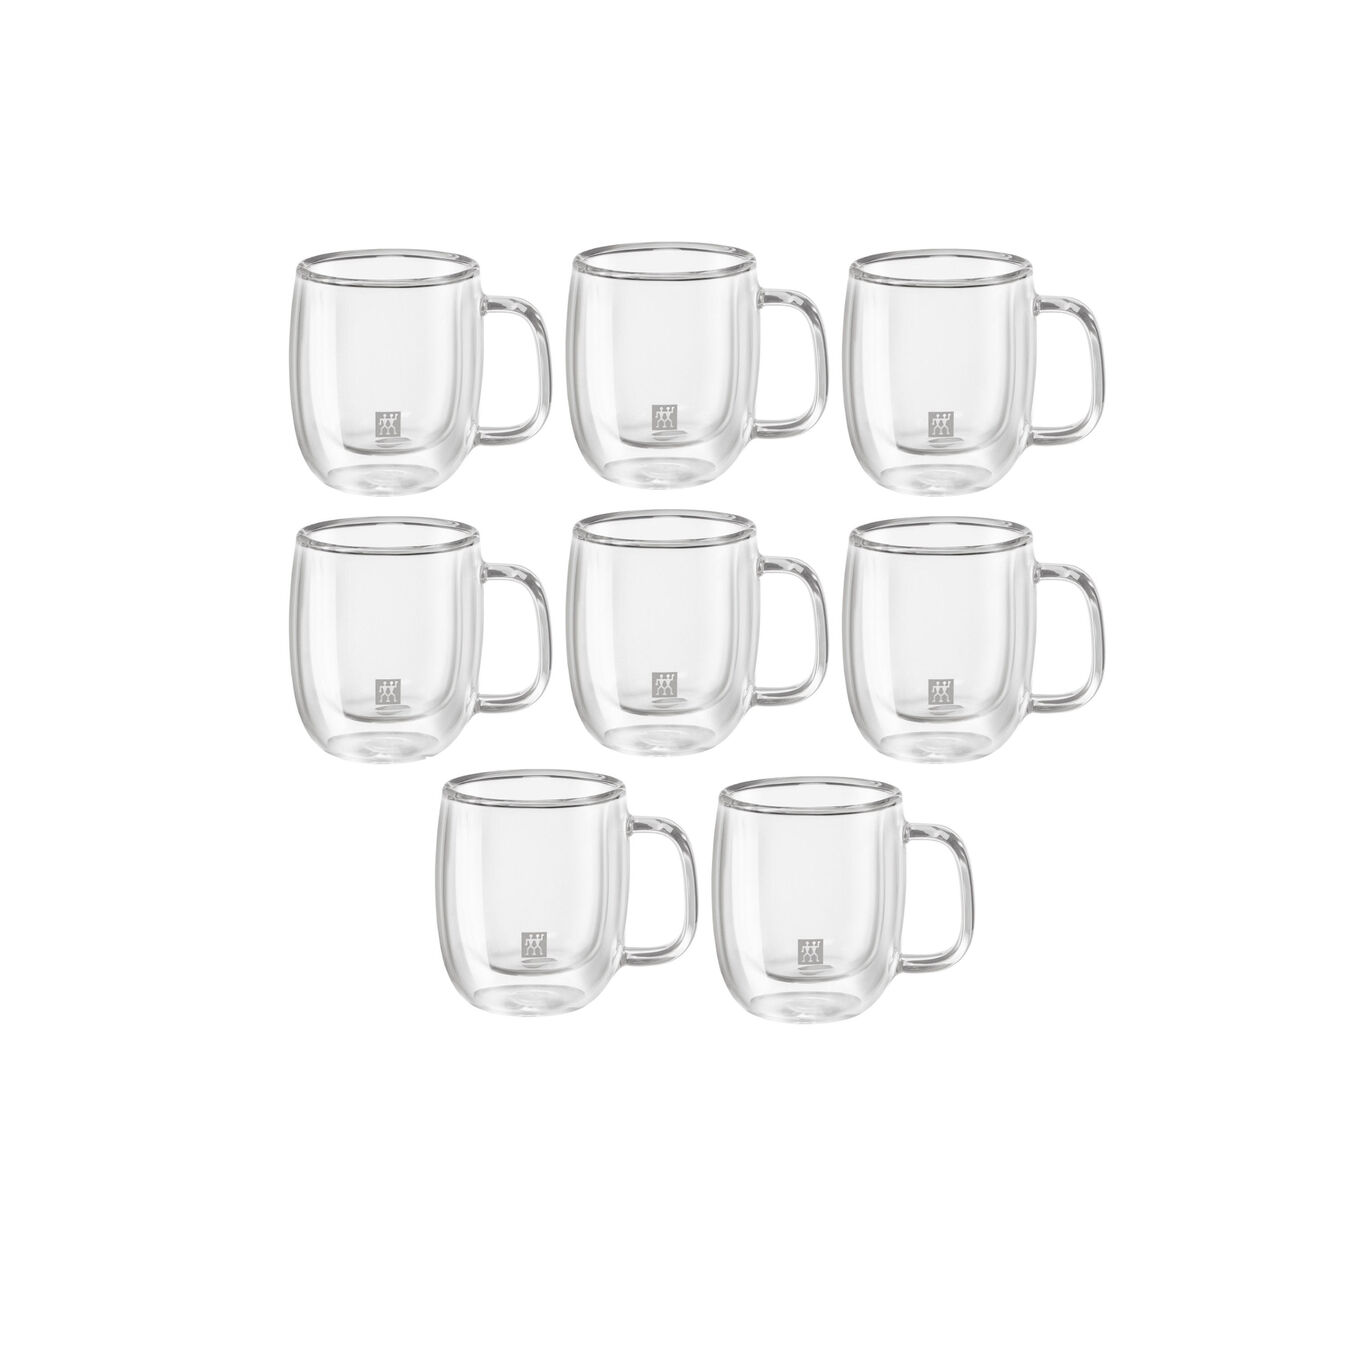 8 Piece Espresso Mug Set - Value Pack,,large 1